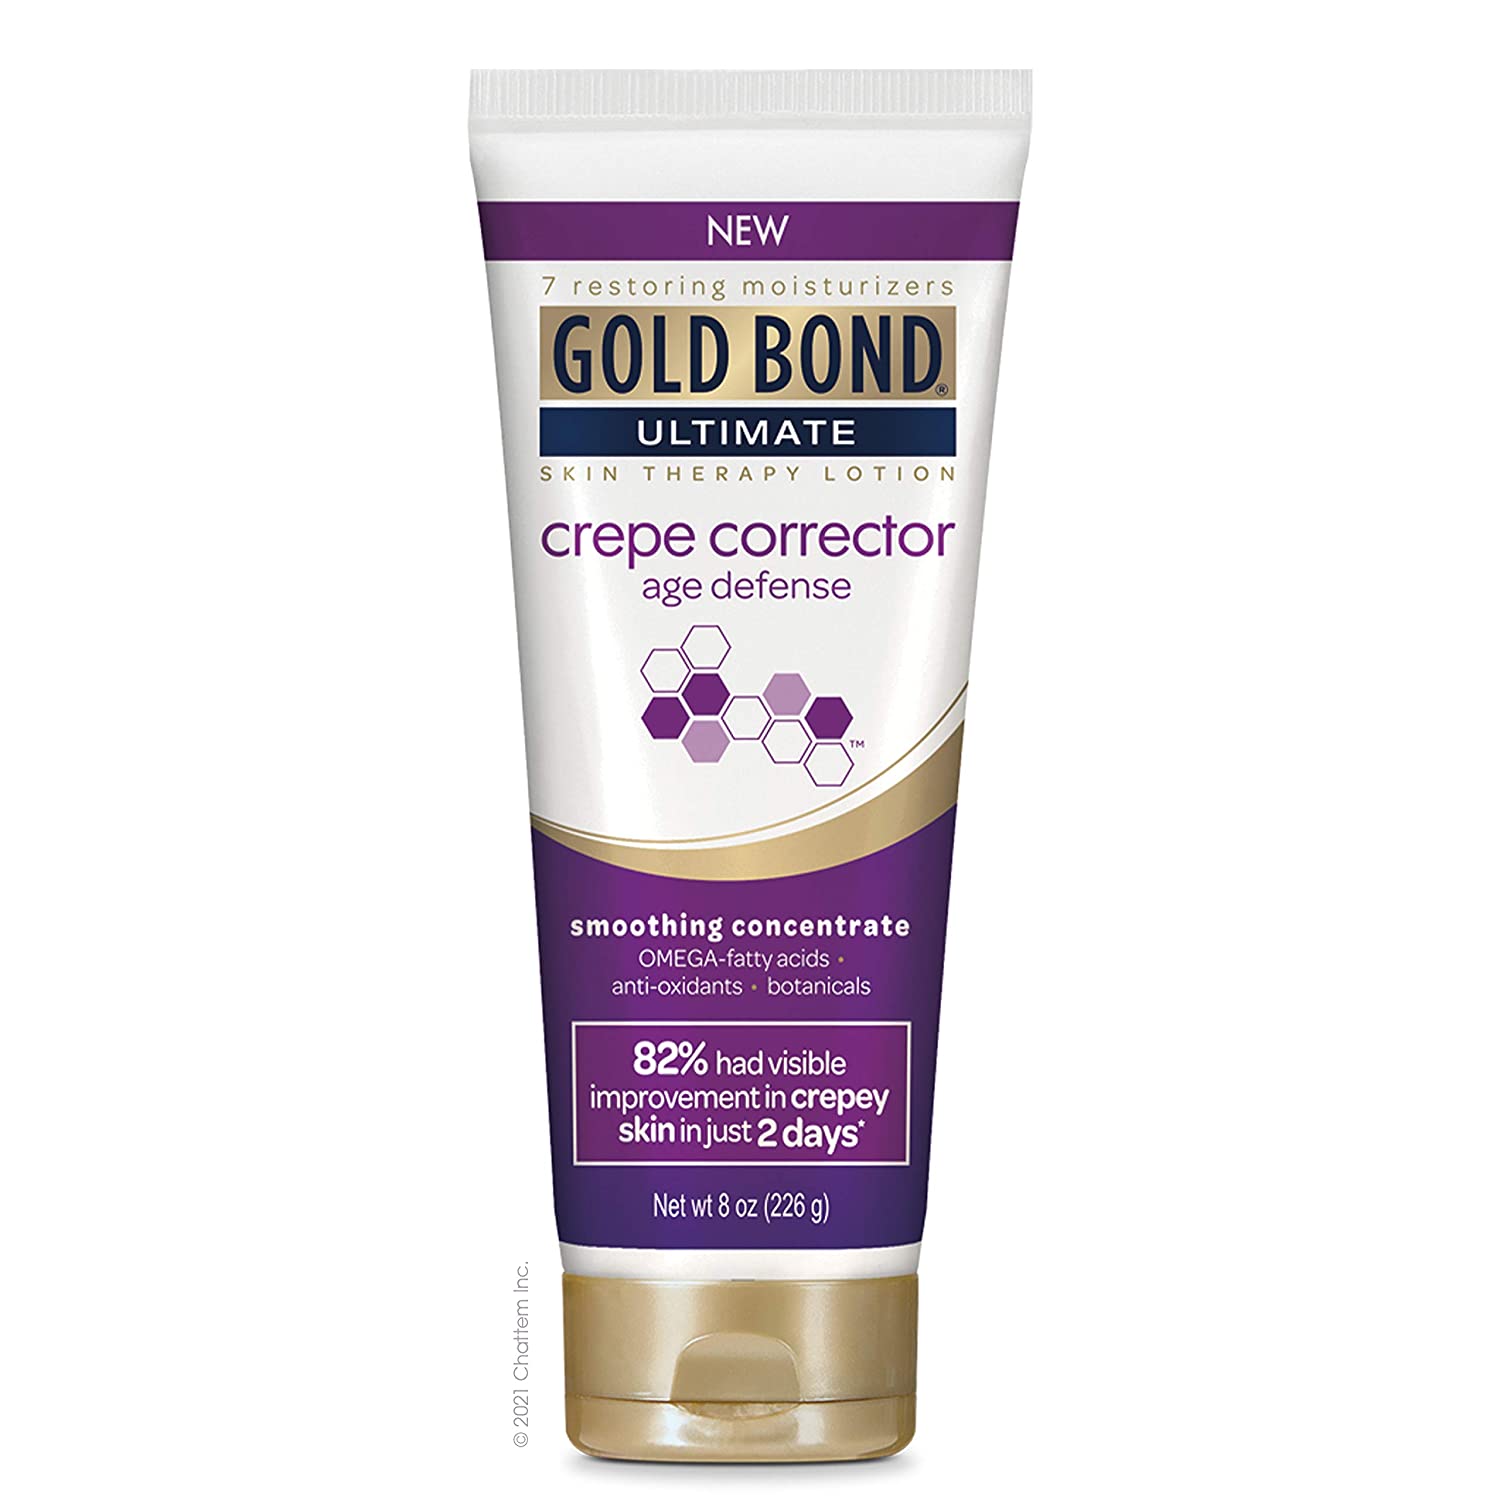 Gold Bond Ultimate Crepe Corrector Age Defense Lotion 226g